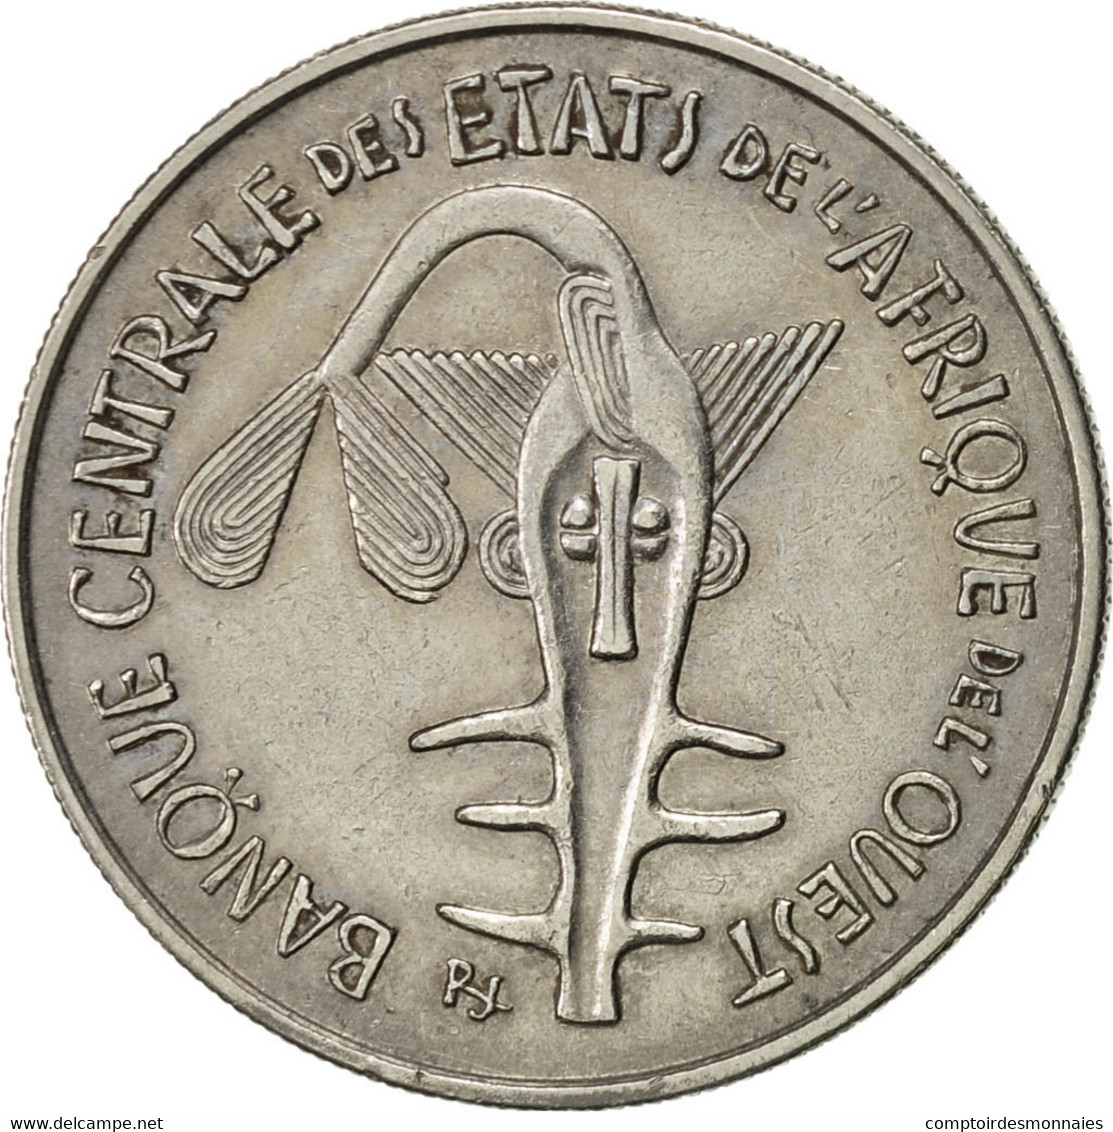 Monnaie, West African States, 100 Francs, 1968, Paris, TTB+, Nickel, KM:4 - Costa De Marfil